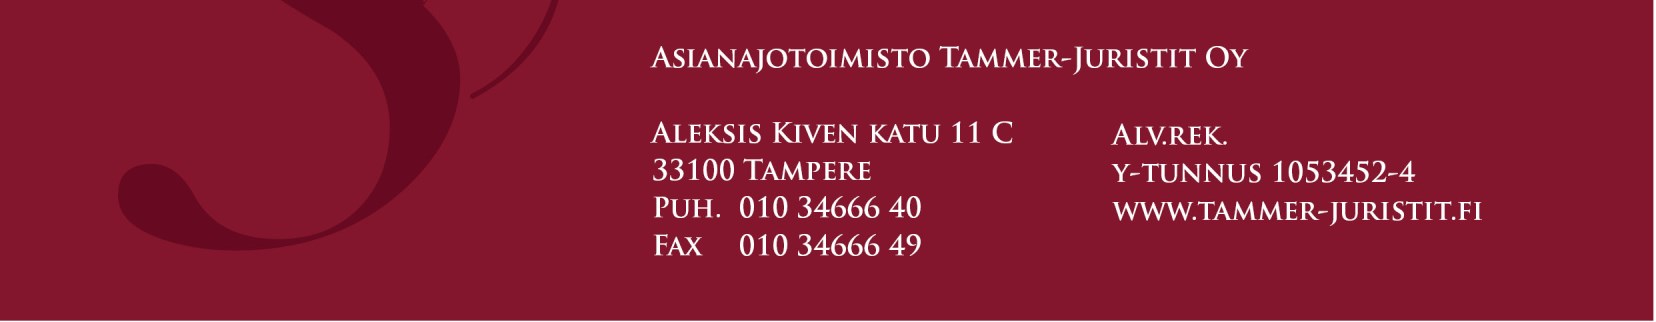 010 346 6640 / Faksi 010 346 6649 Sähköposti: etunimi.sukunimi@tammer-juristit.fi Päävastuullinen lakimies: 3.